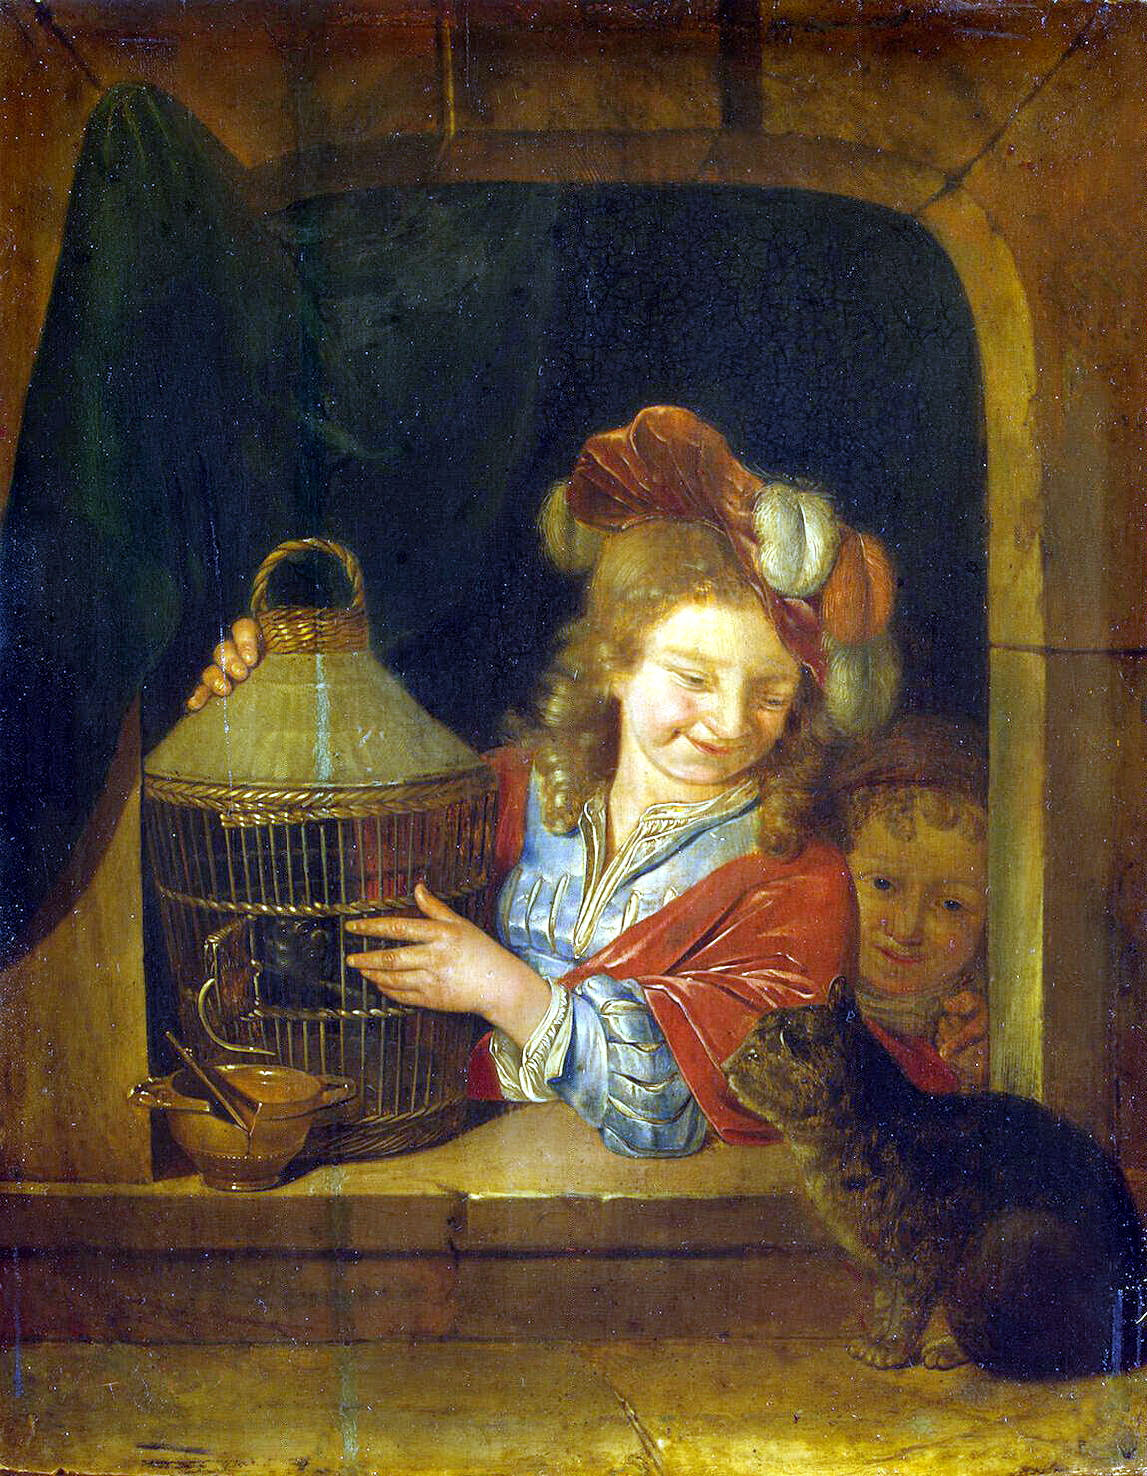 Эглон Хендрик ван дер Нер. "Дети с птичкой и кошкой". 1680-е. Эрмитаж, Санкт-Петербург.